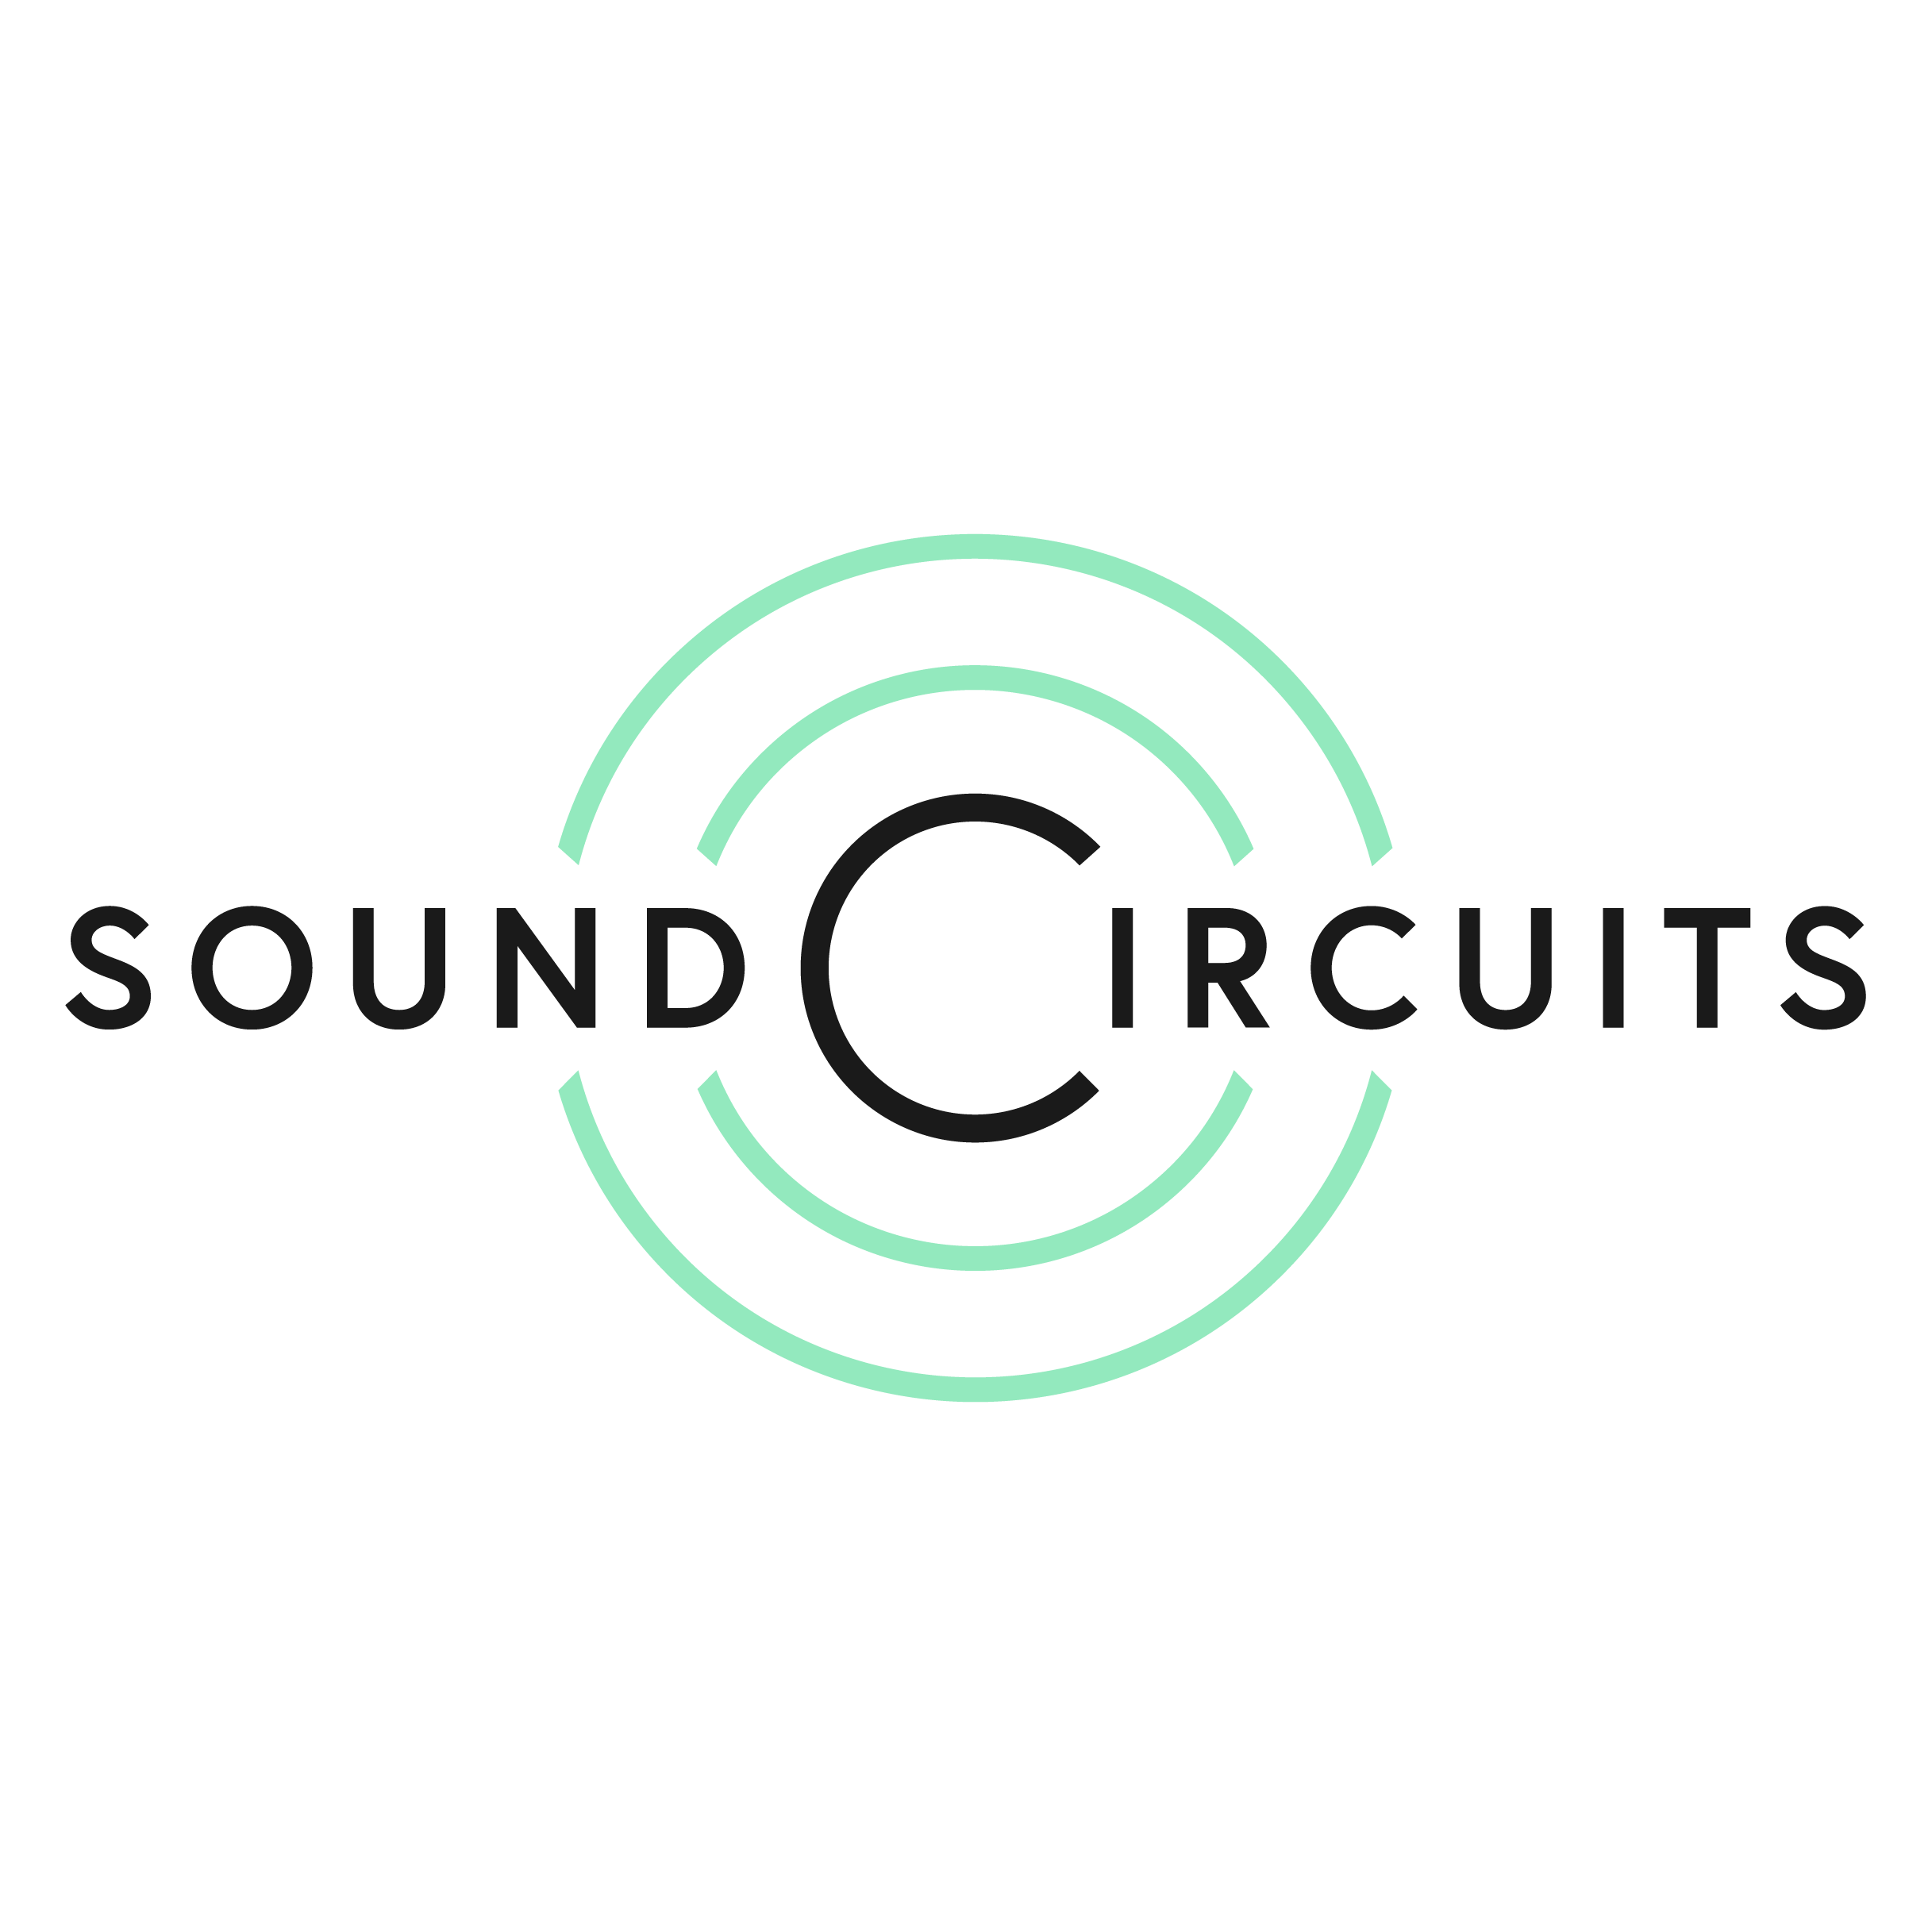 Sound Circuits Ltd